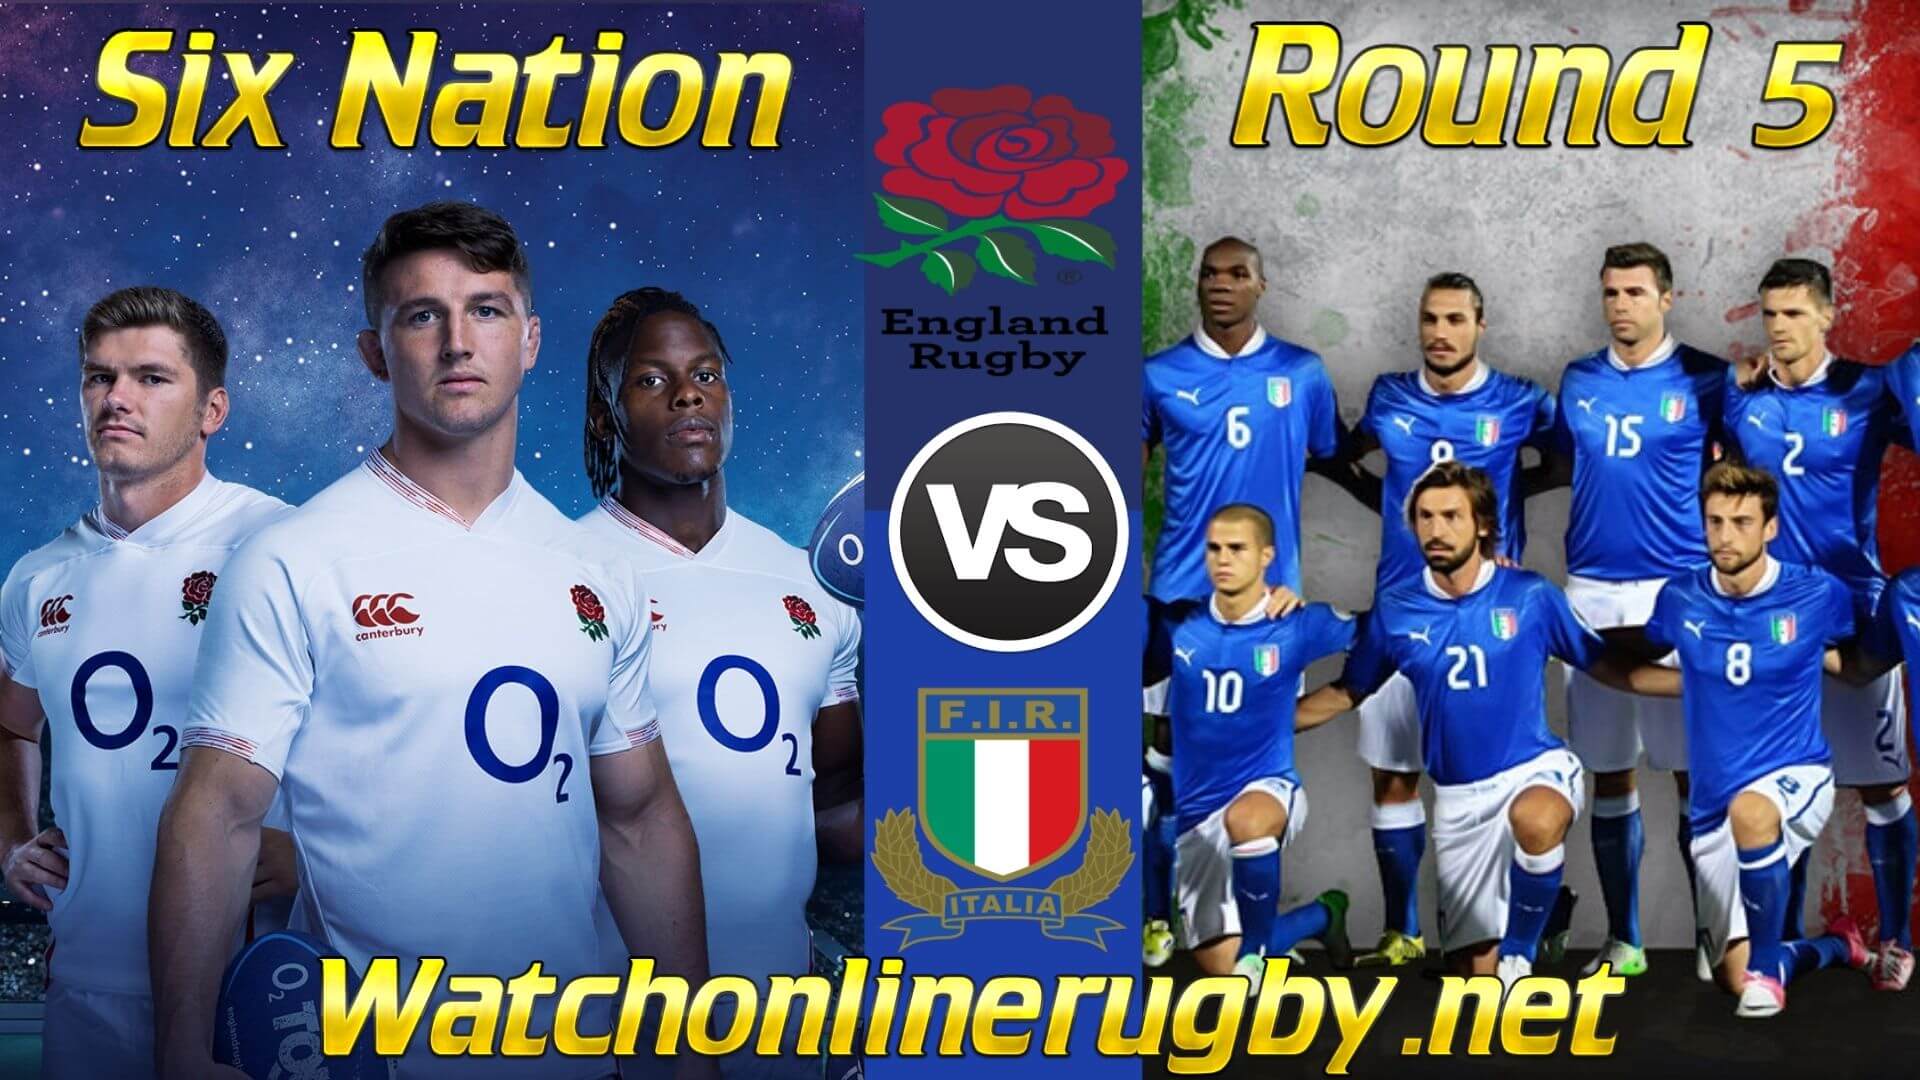 England vs Italy Six Nations 2020 RD 5